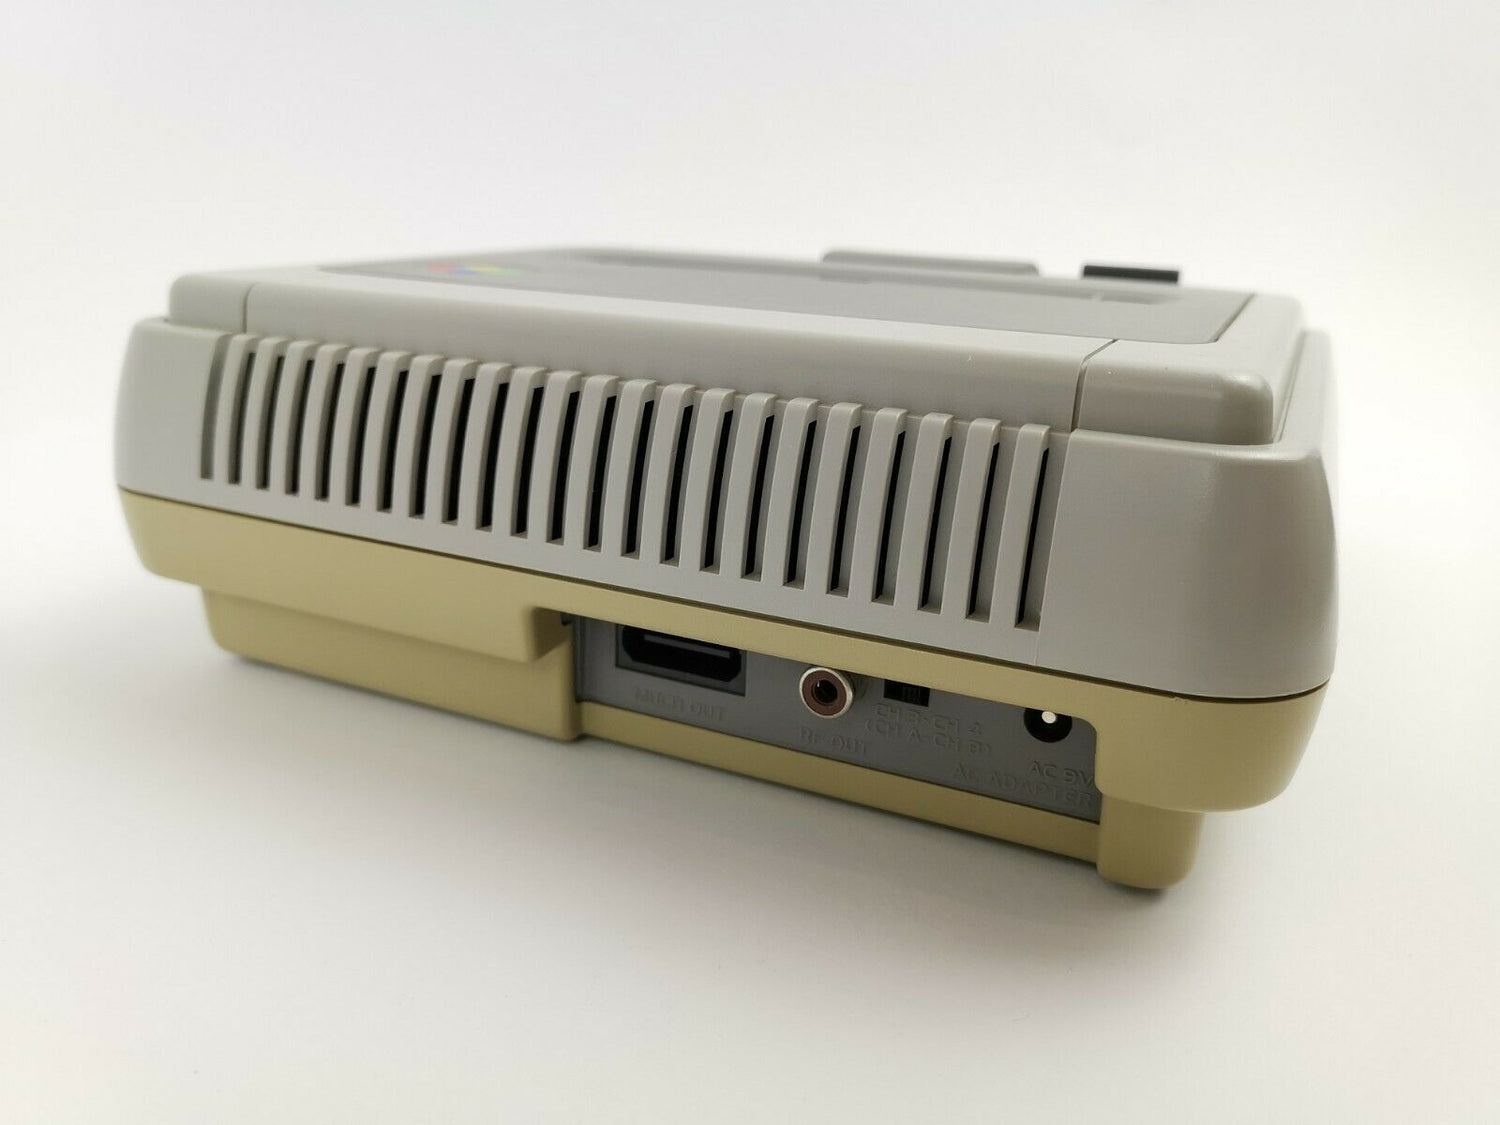 Super Nintendo SNES console, 1 controller, Super Mario World & connection cable